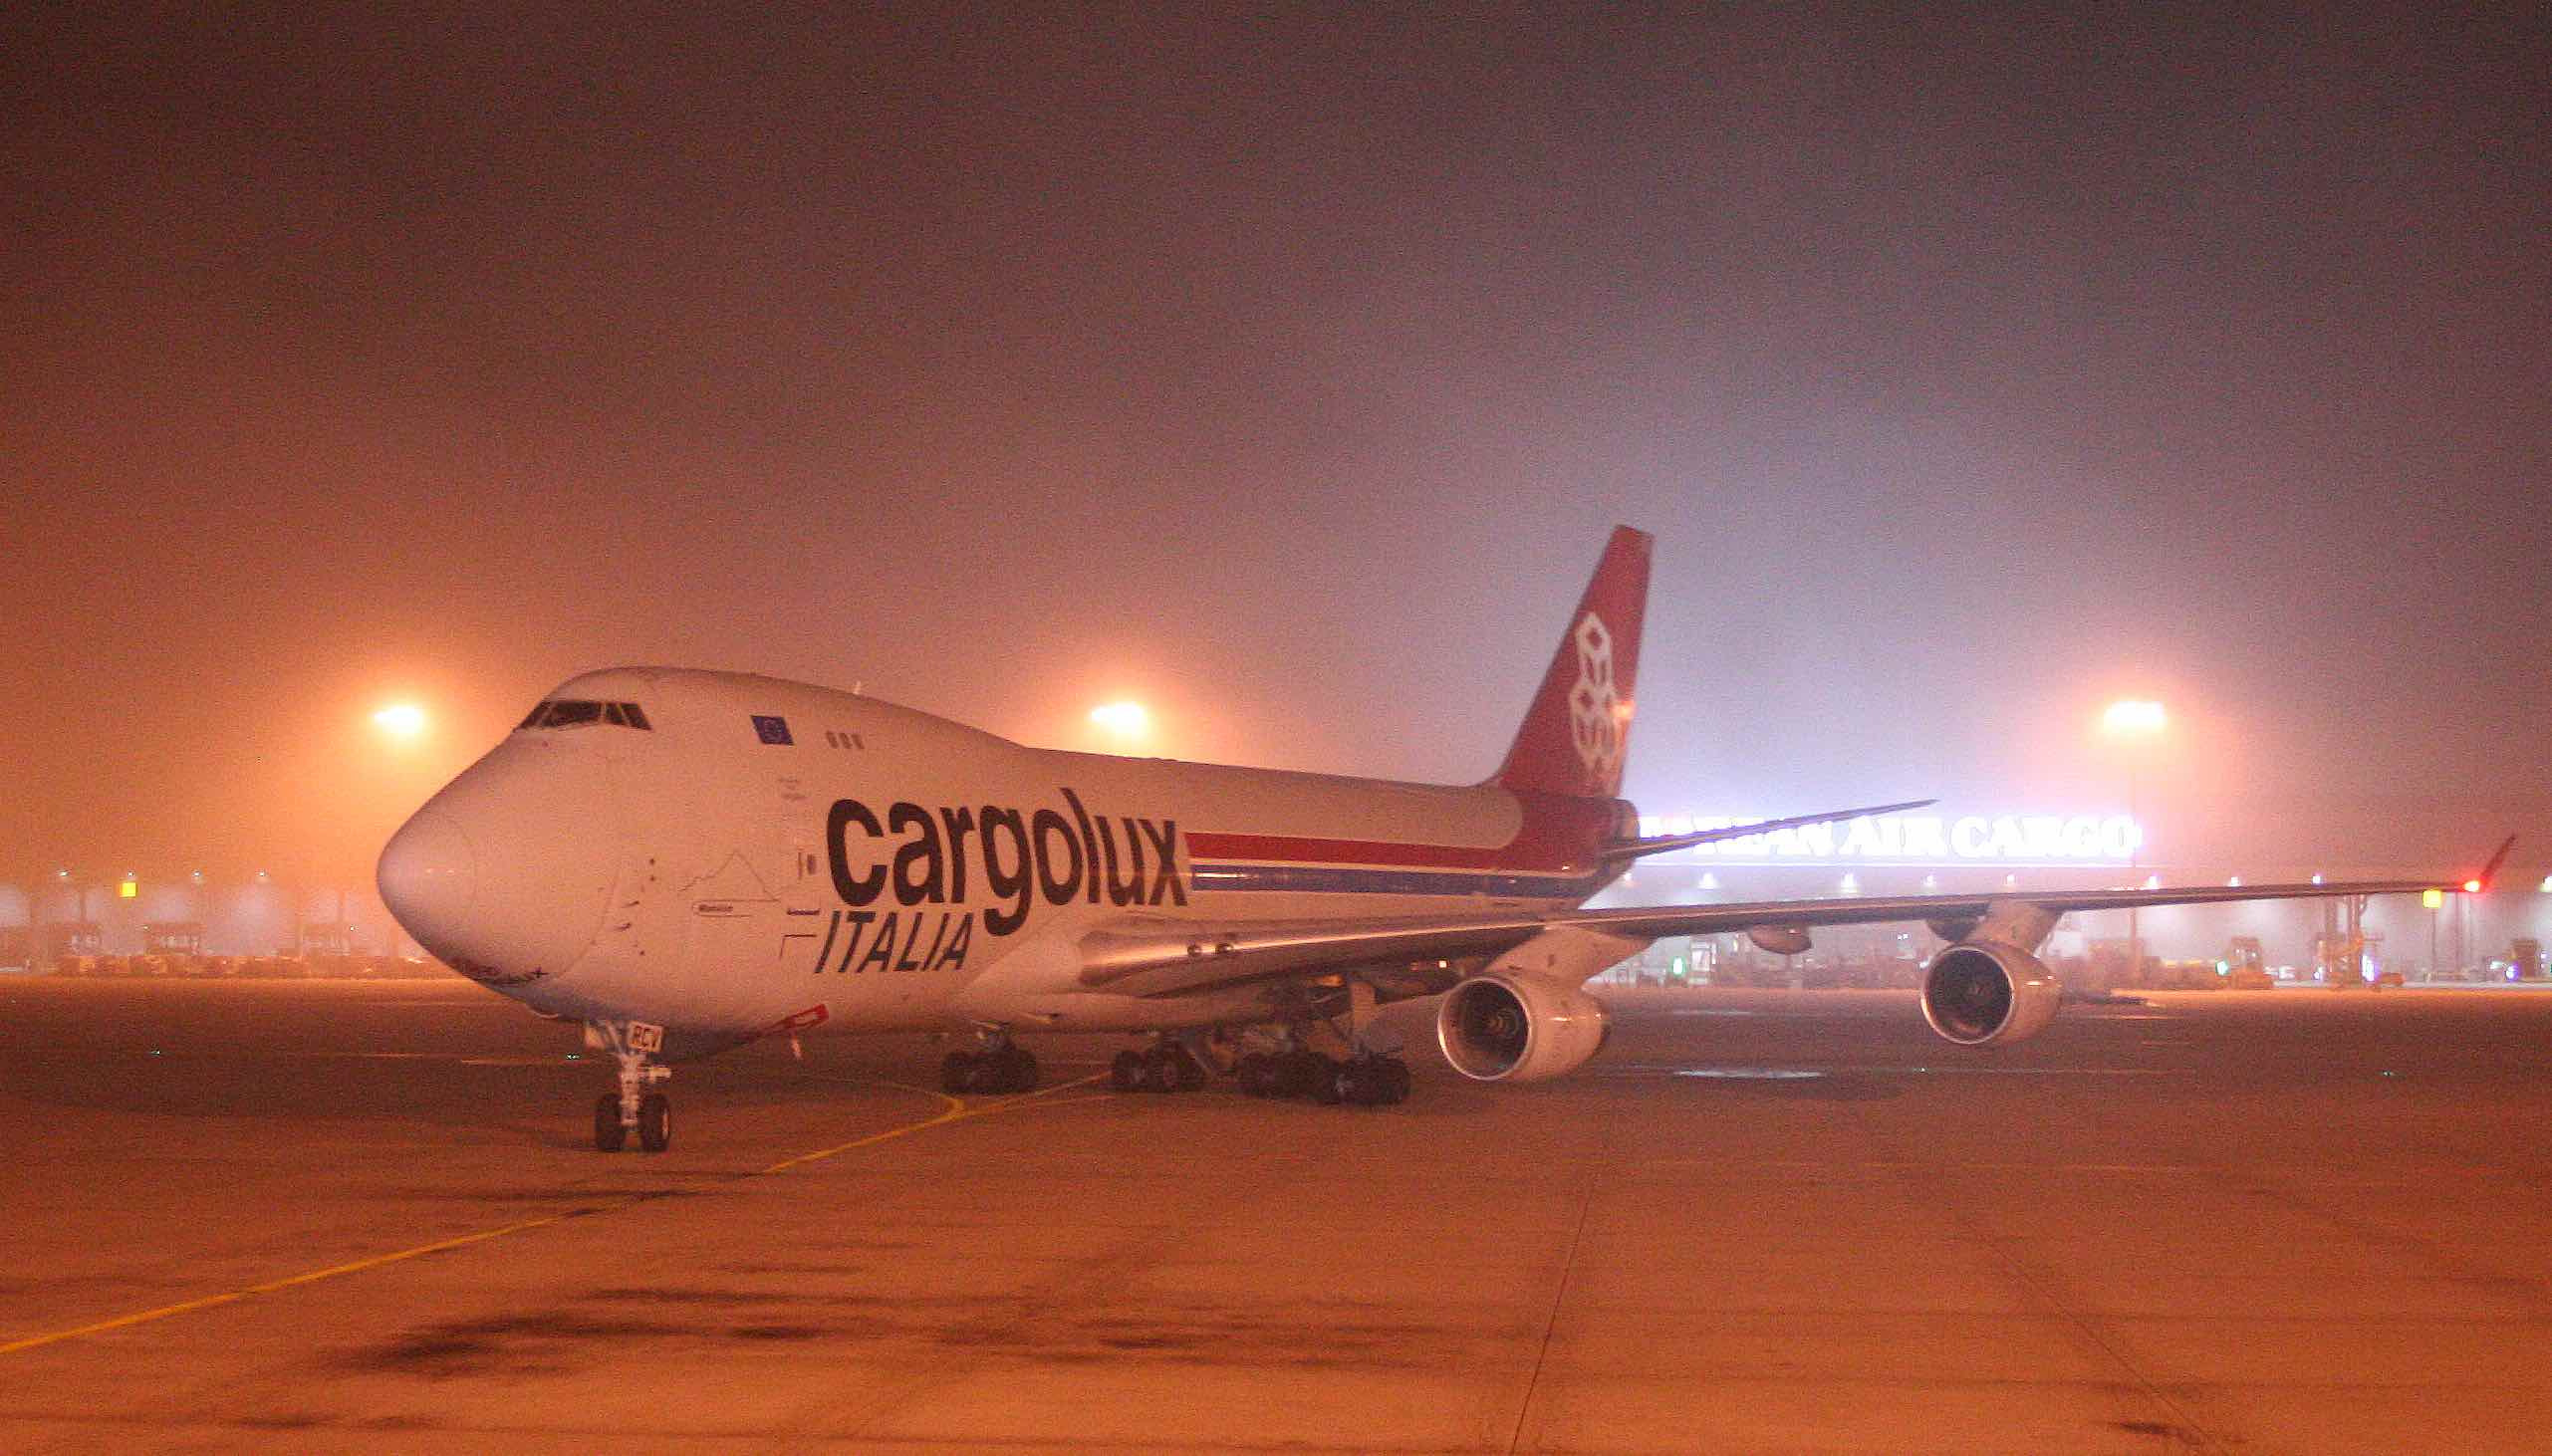 Cargolux Italia launches Incheon freighter route